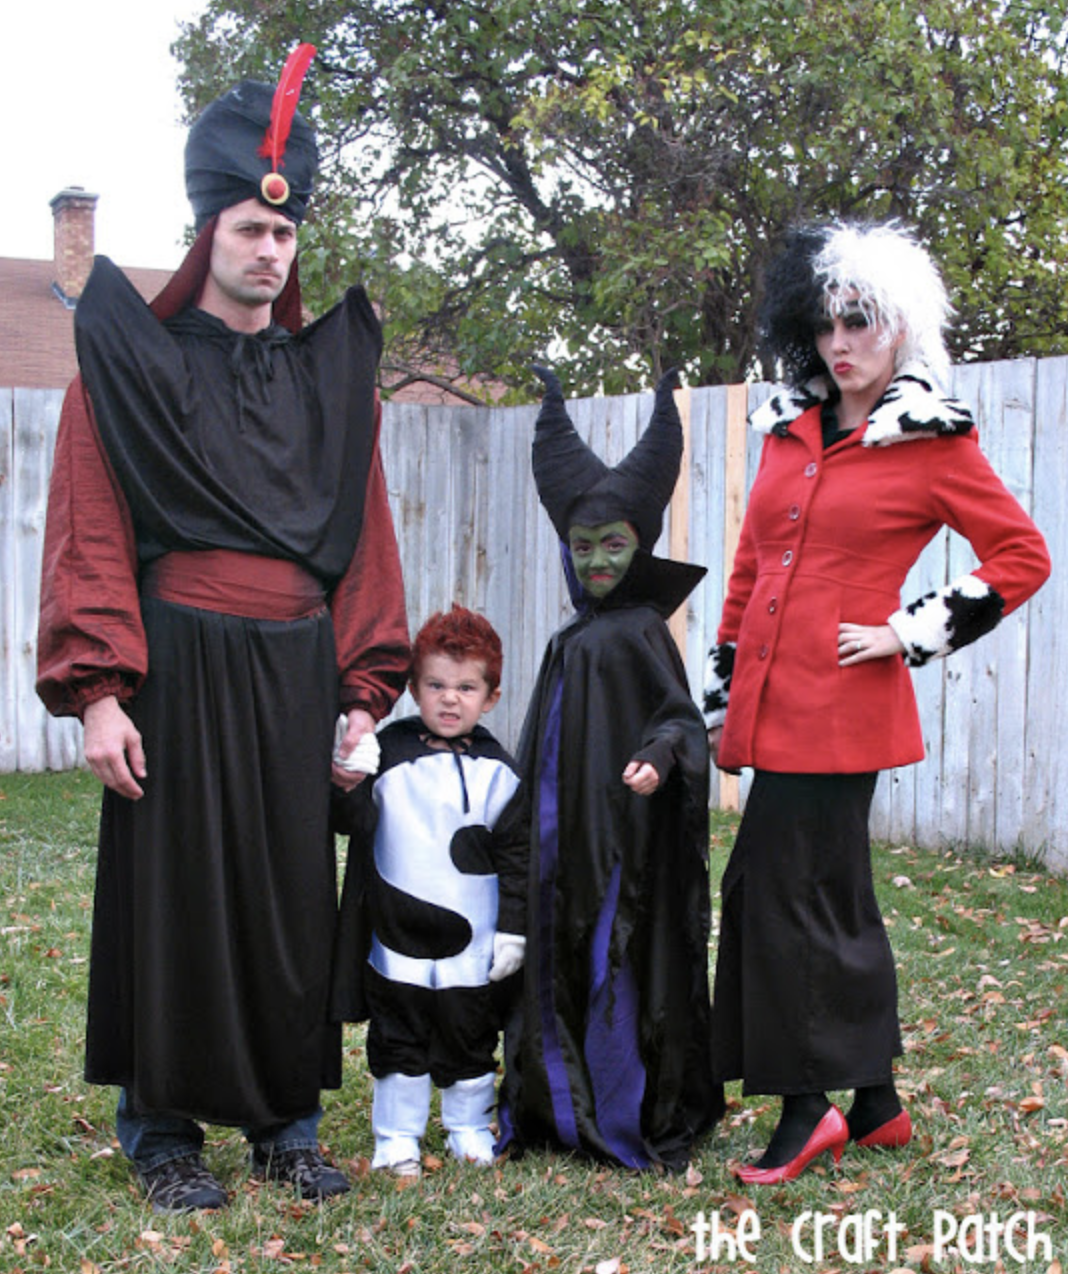 Family Halloween Costume Ideas | LivingLesh - a lifestyle blog